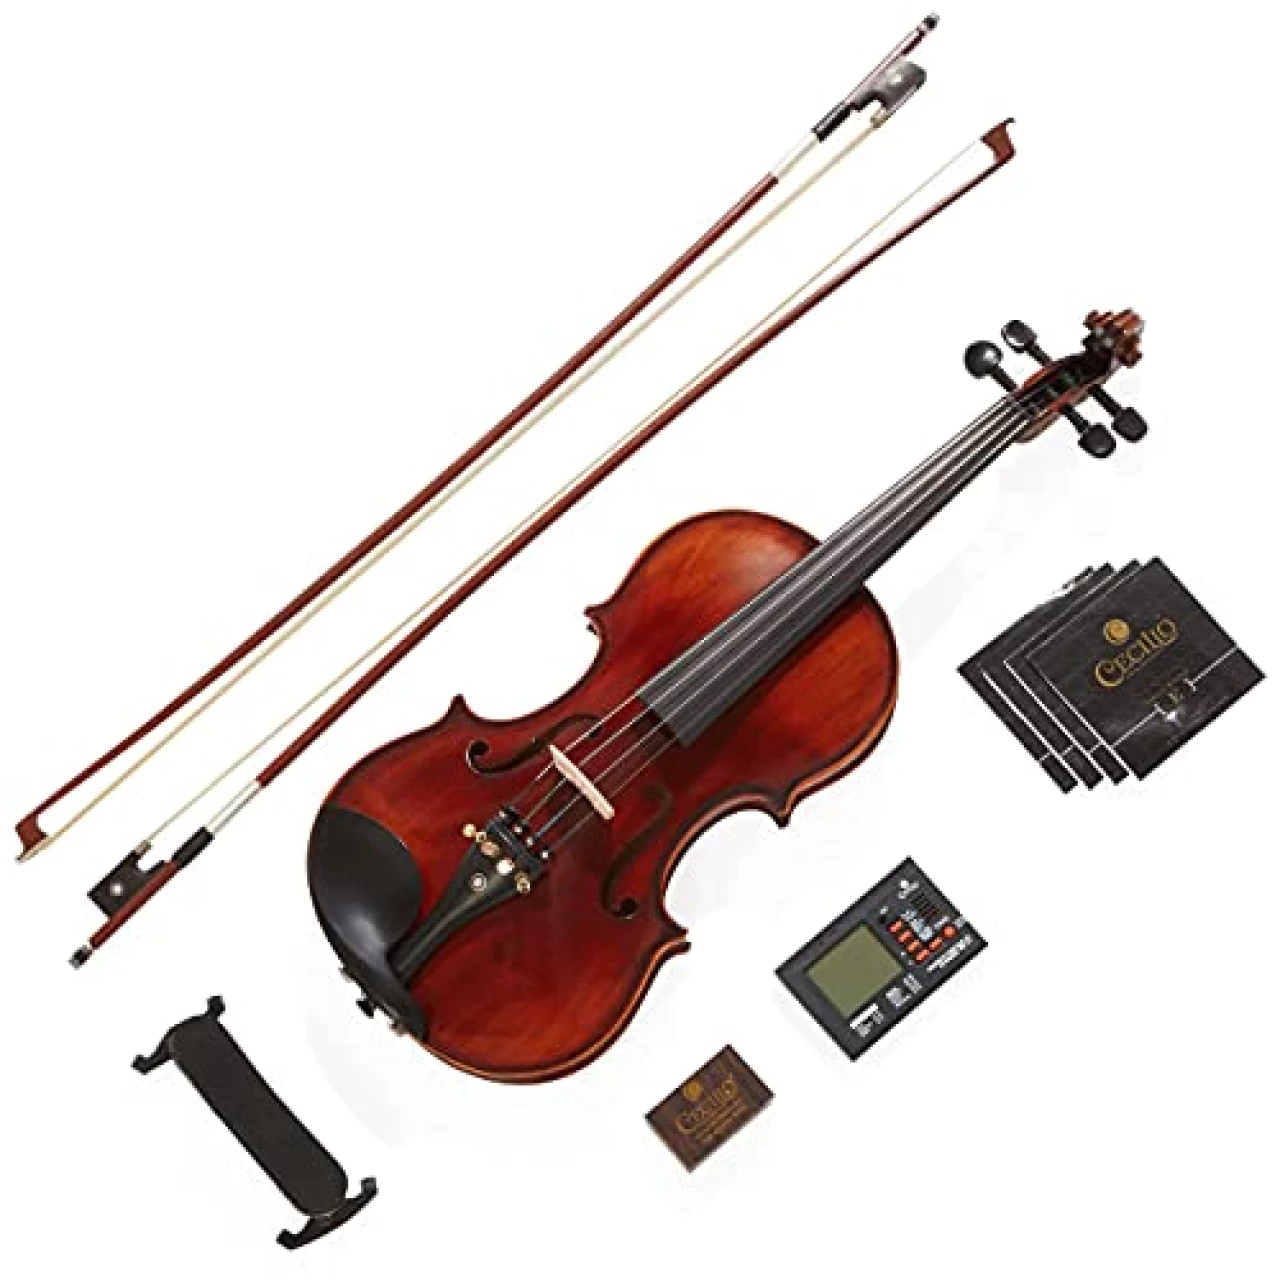 Mendini By Cecilio Violin - MV500+92D - Size 4/4 (Full Size), Black Solid Wood - Flamed, 1-Piece Violins w/Case, Tuner, Shoulder Rest, Bow, Rosin, Bridge &amp; Strings - Adult, Kids